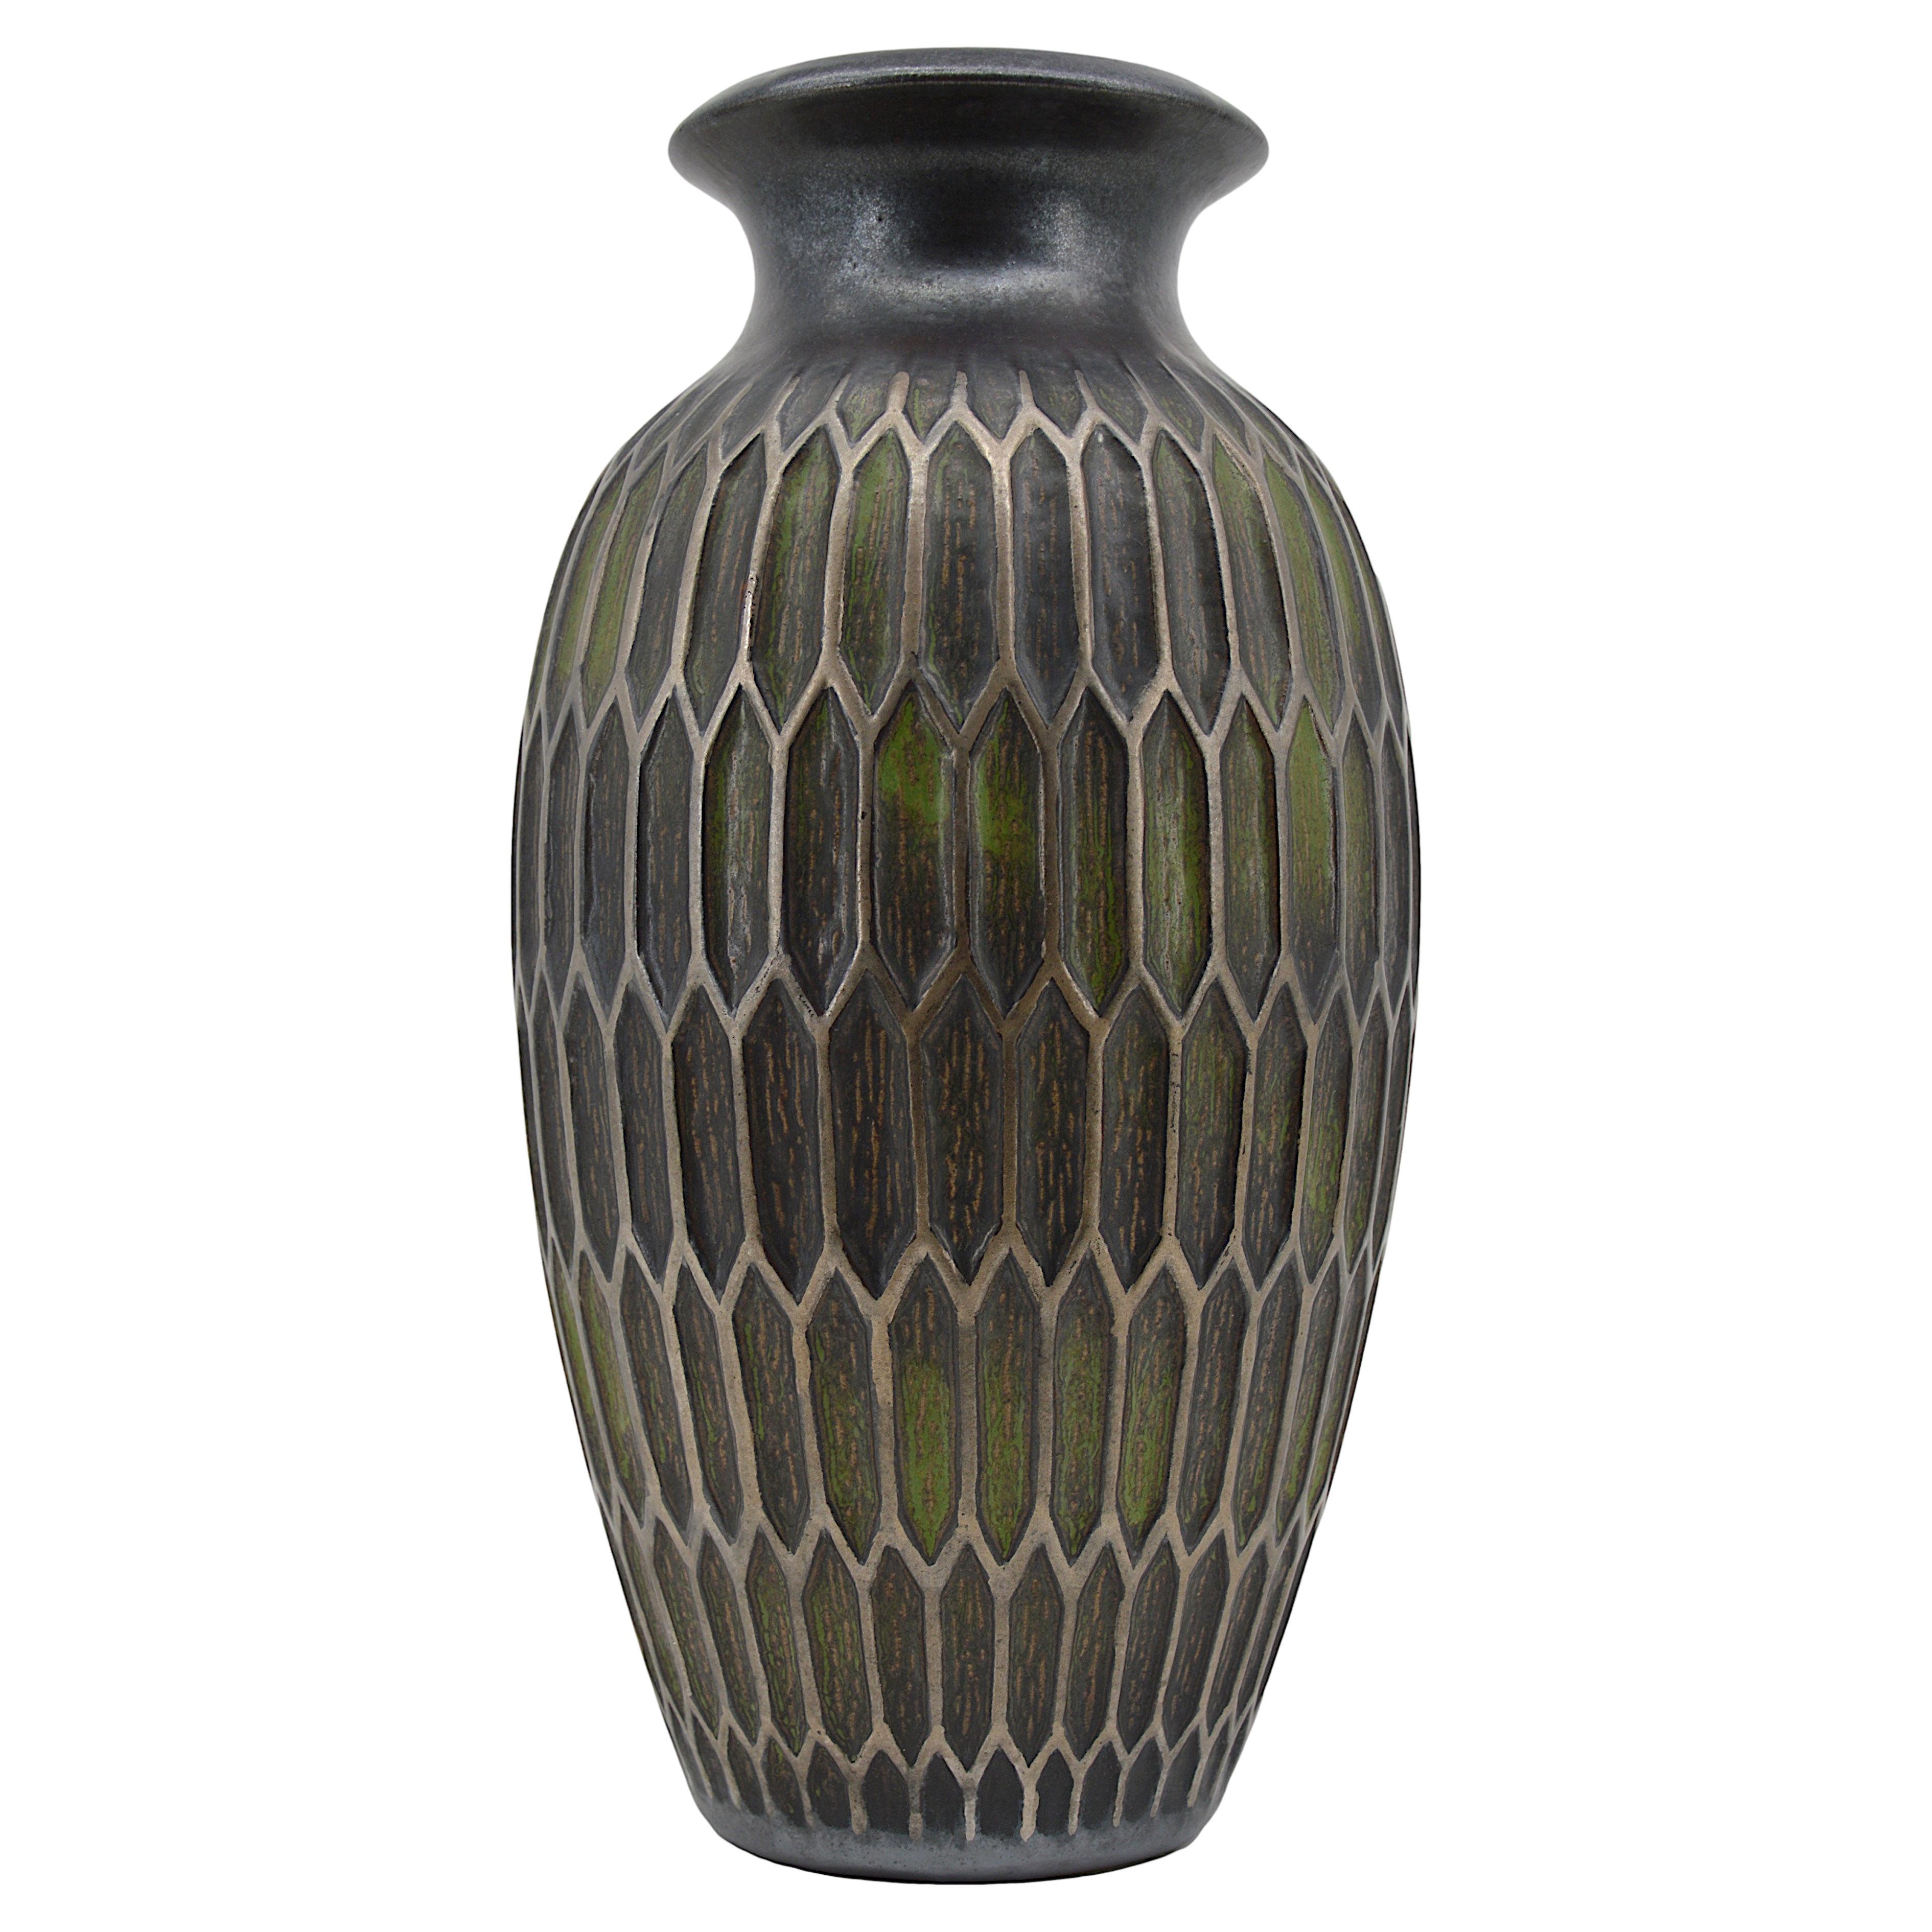 Joseph Mougin Art Deco Vase, Honeycomb, Late 1920s